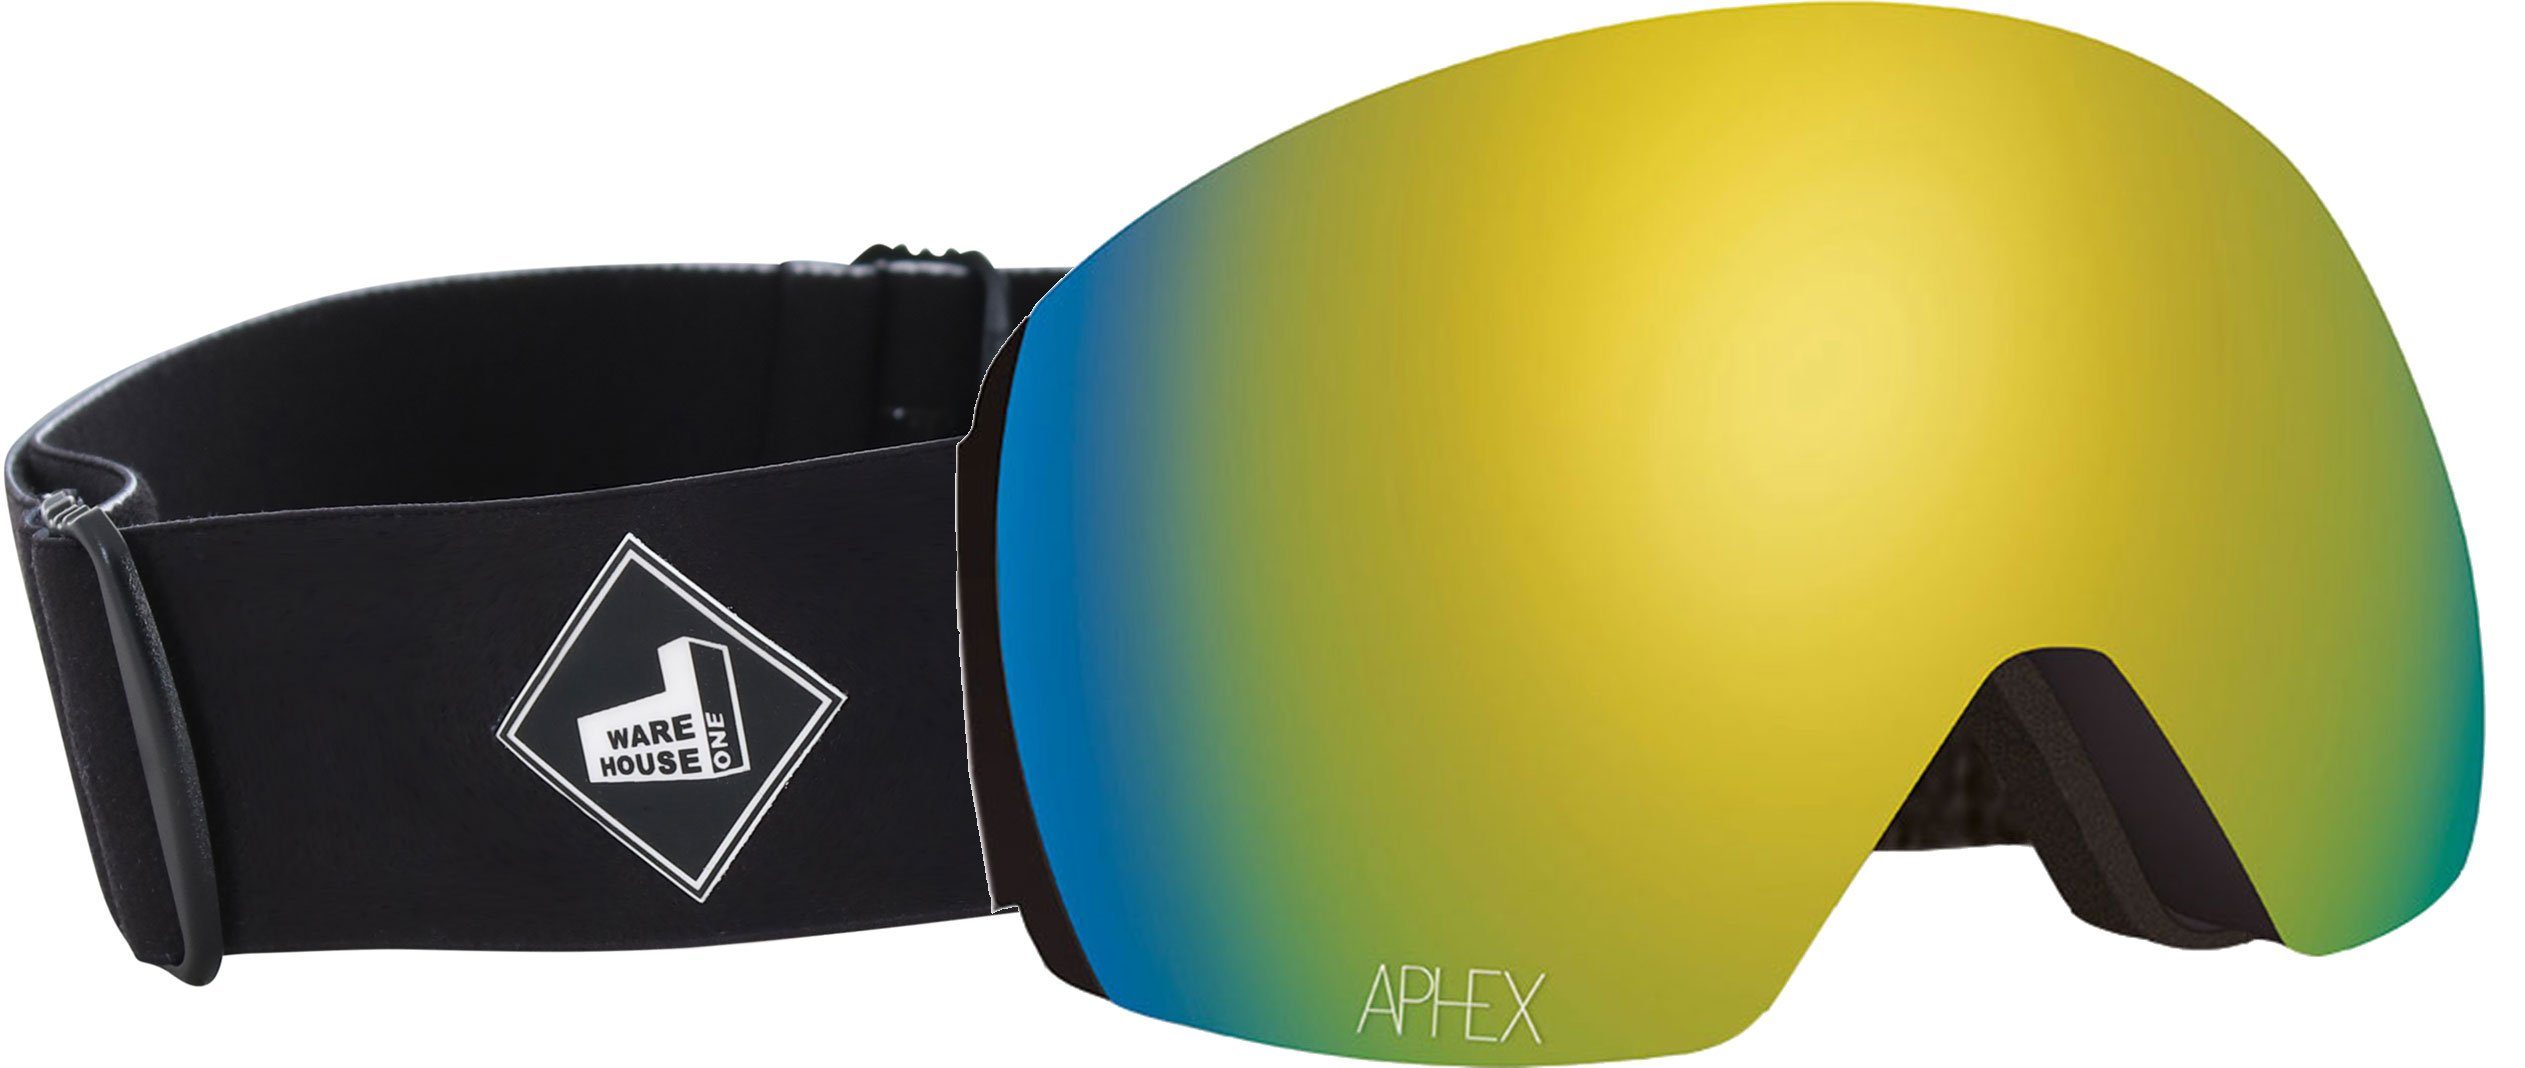 Aphex Snowboardbrille APHEX STYX THE ONE EDITION Magnet Schneebrille black strap/revo + Glas